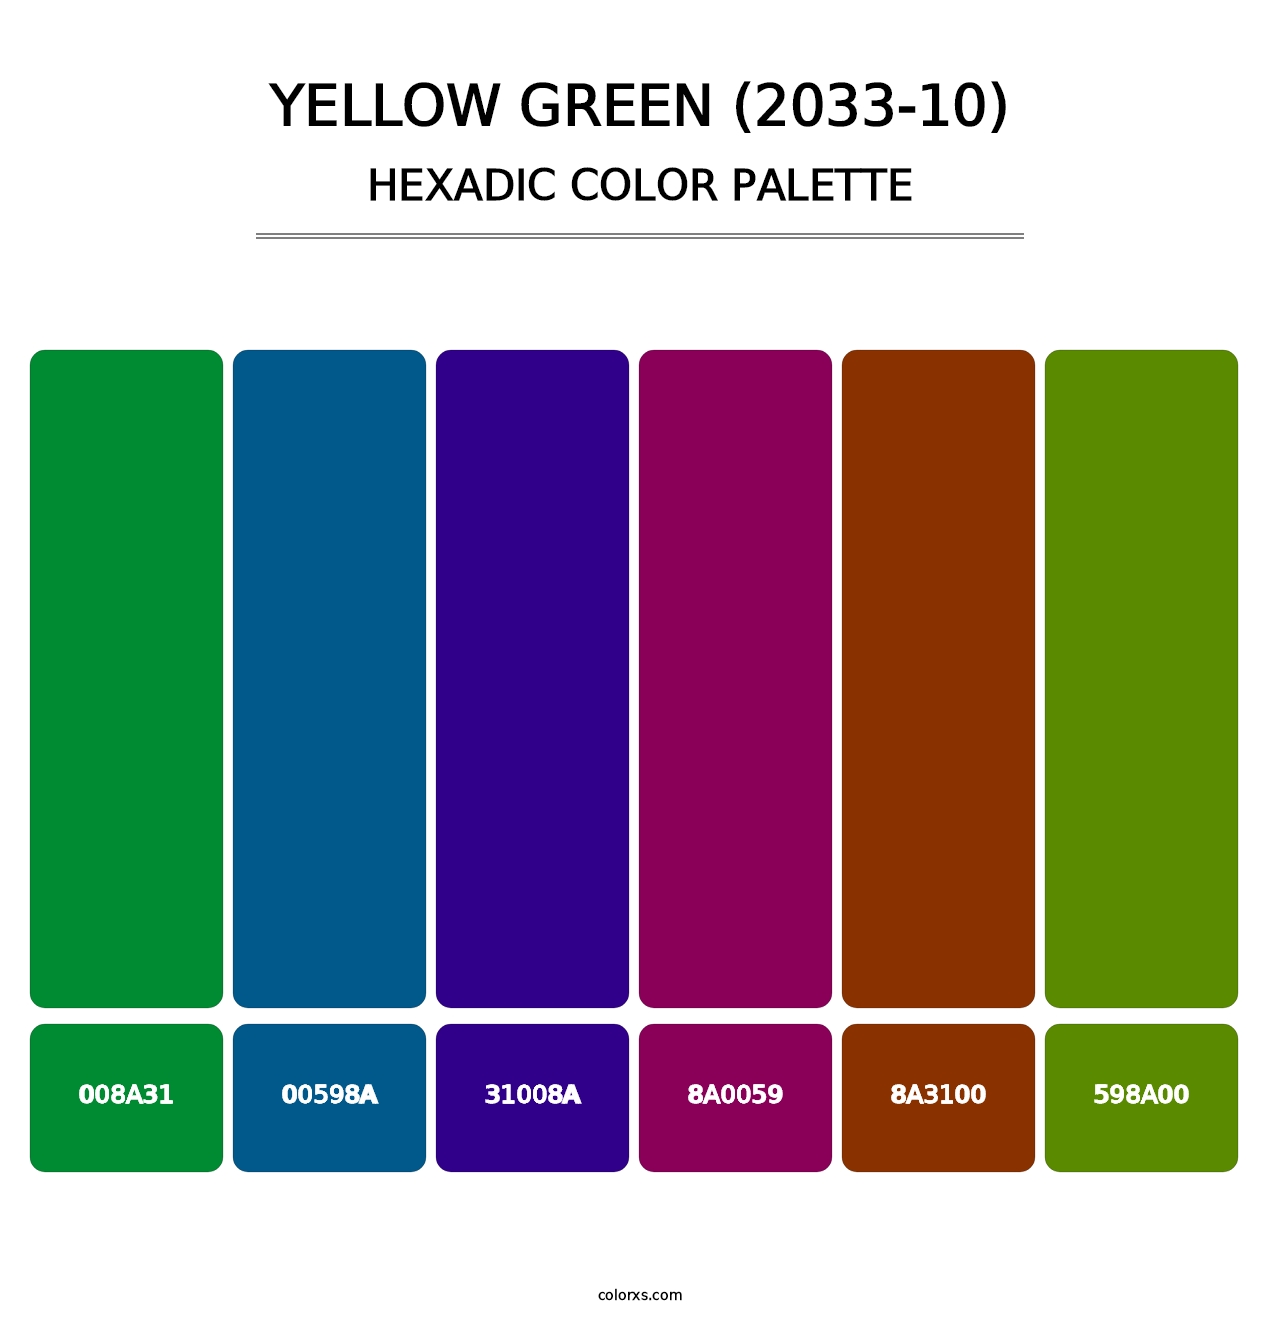 Yellow Green (2033-10) - Hexadic Color Palette